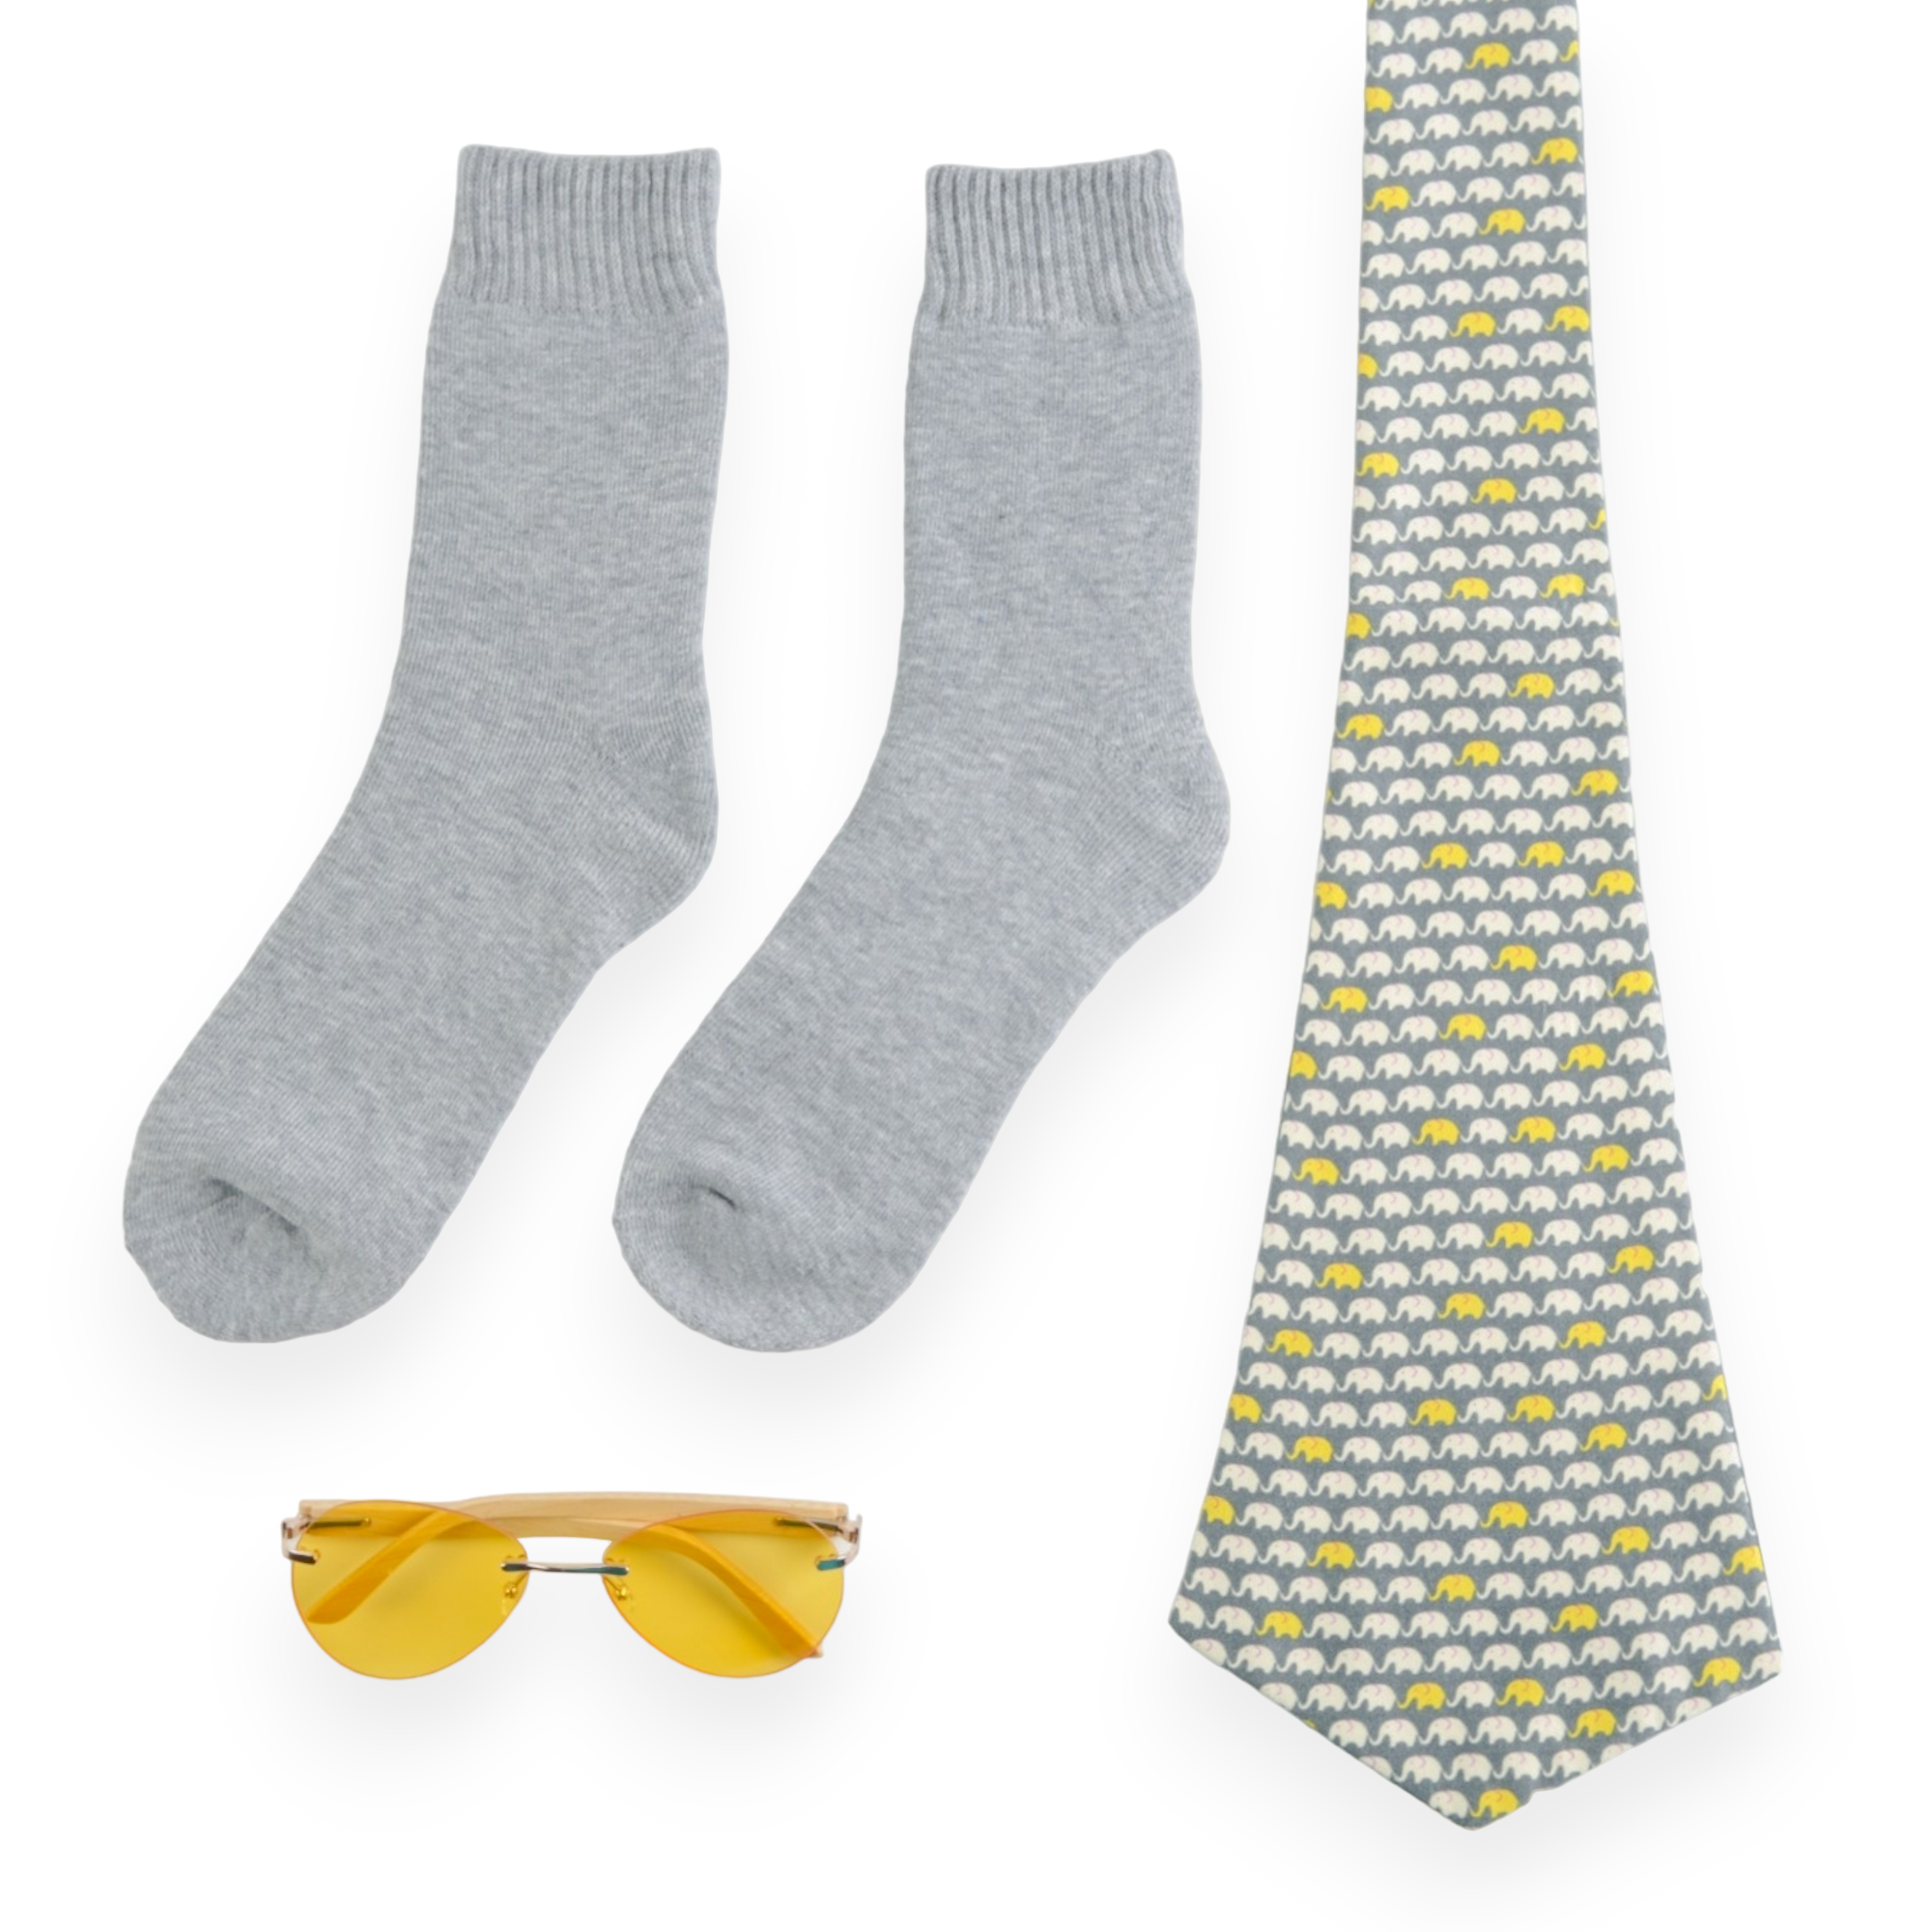 Chokore Special 3-in-1 Gift Set (Cravat, Sunglasses, & Socks)